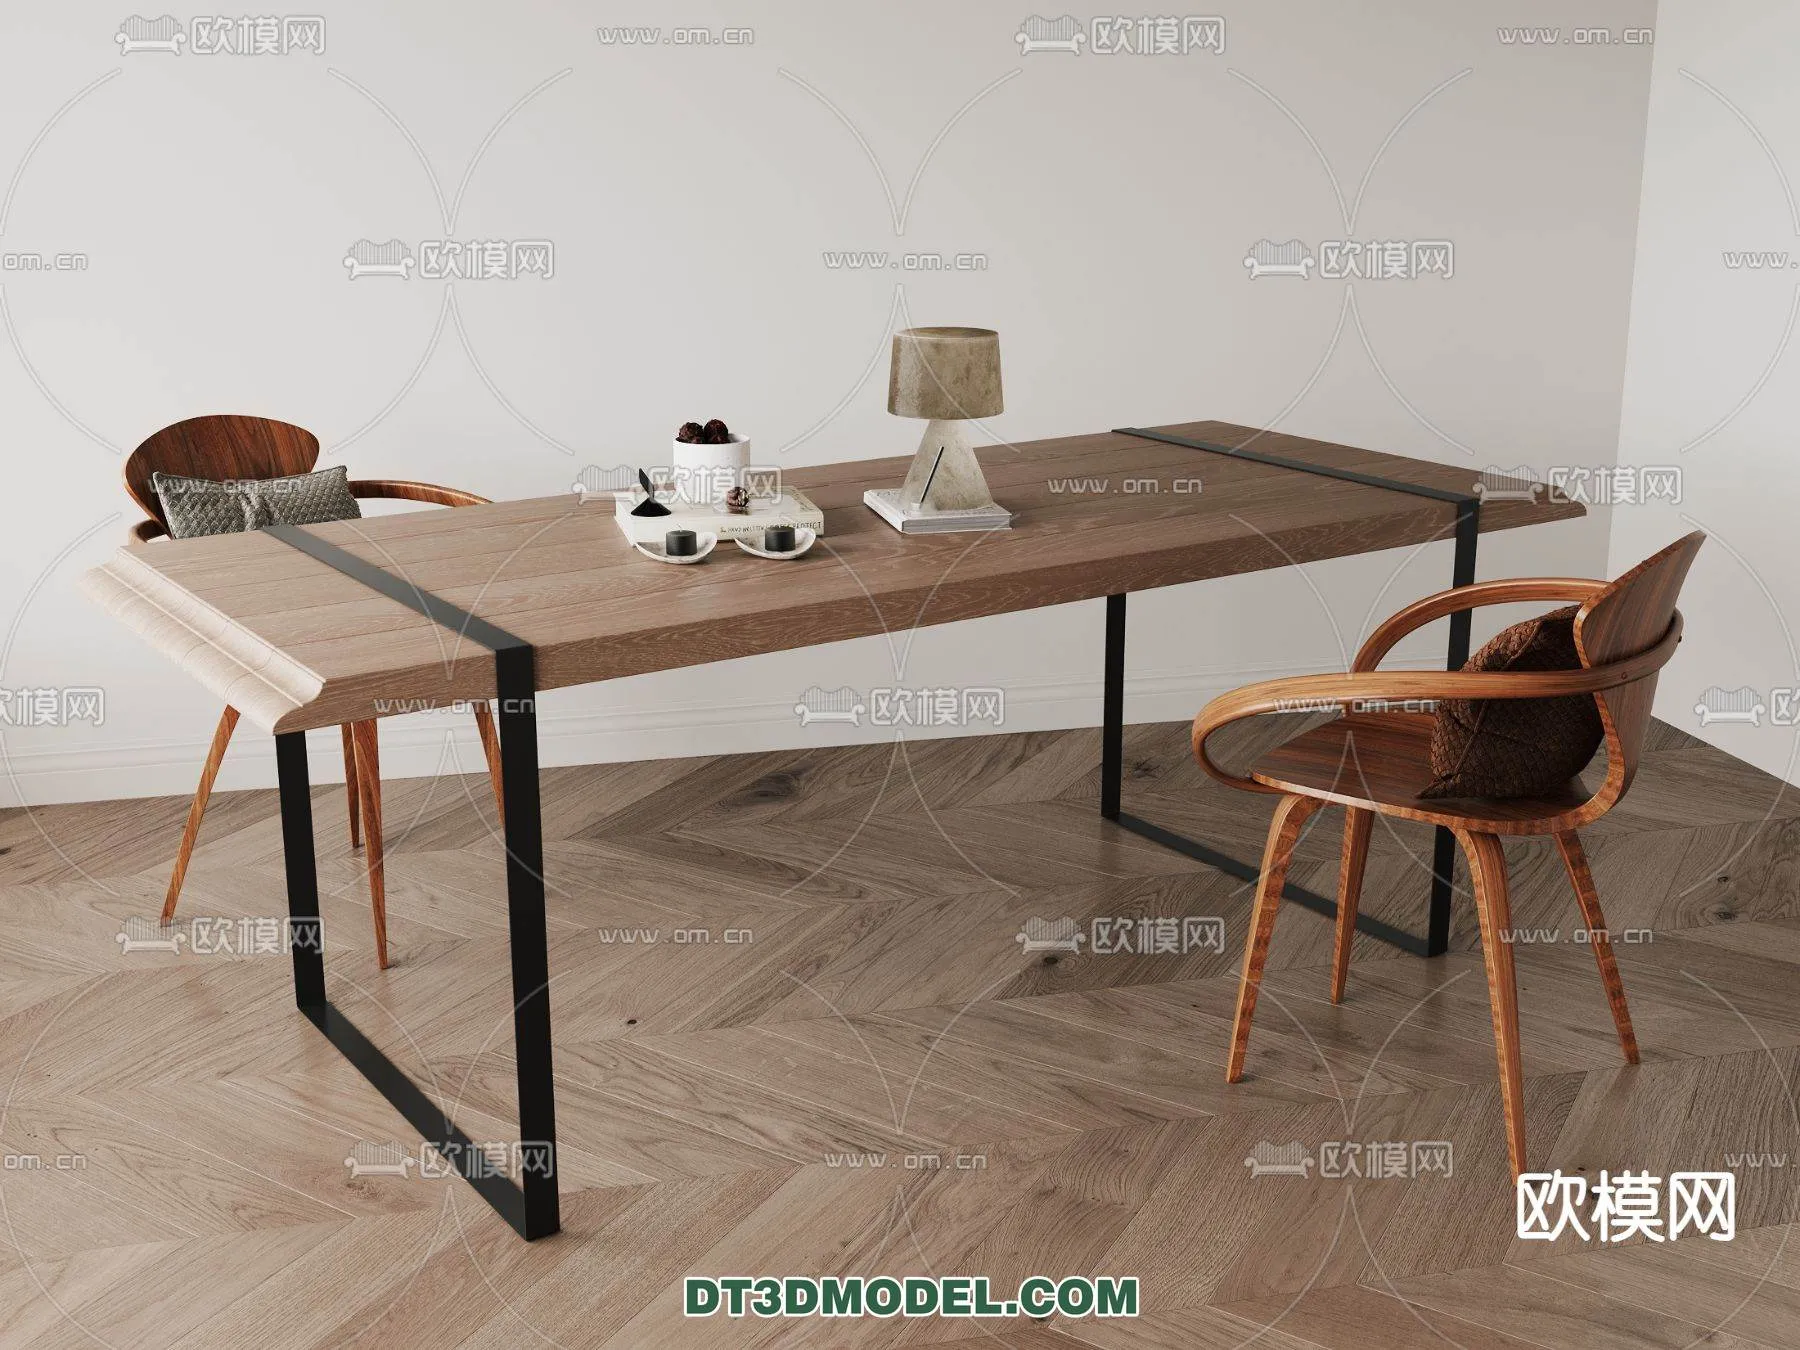 WABI SABI STYLE 3D MODELS – DINING TABLE – 0148